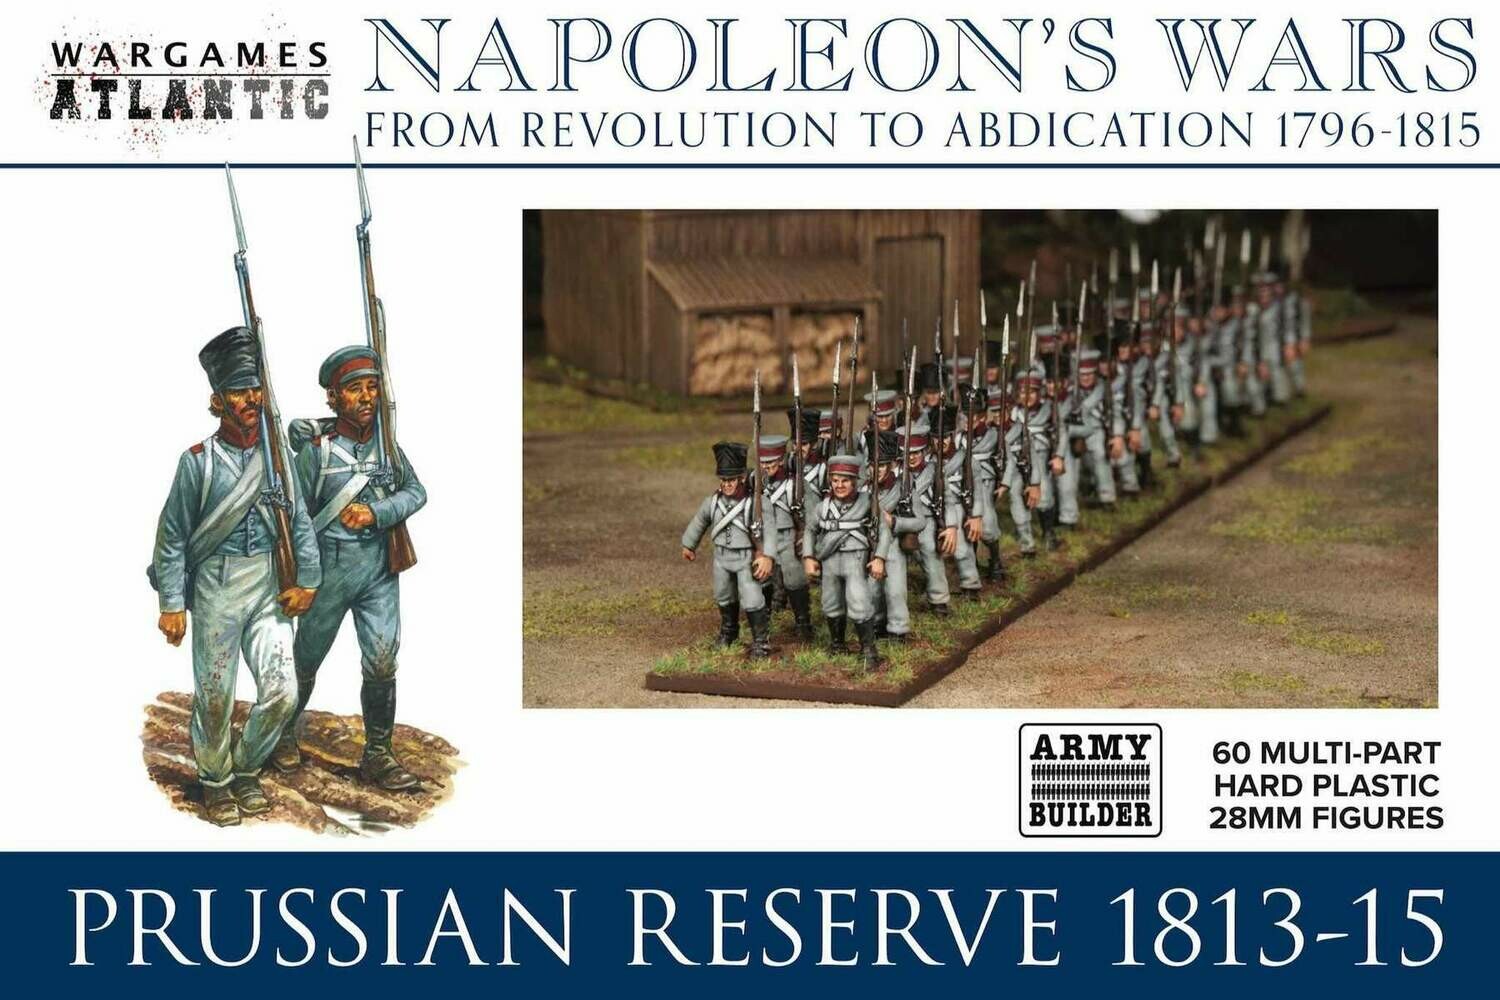 Napoleon's Wars: Prussian Reserve (1813-1815)